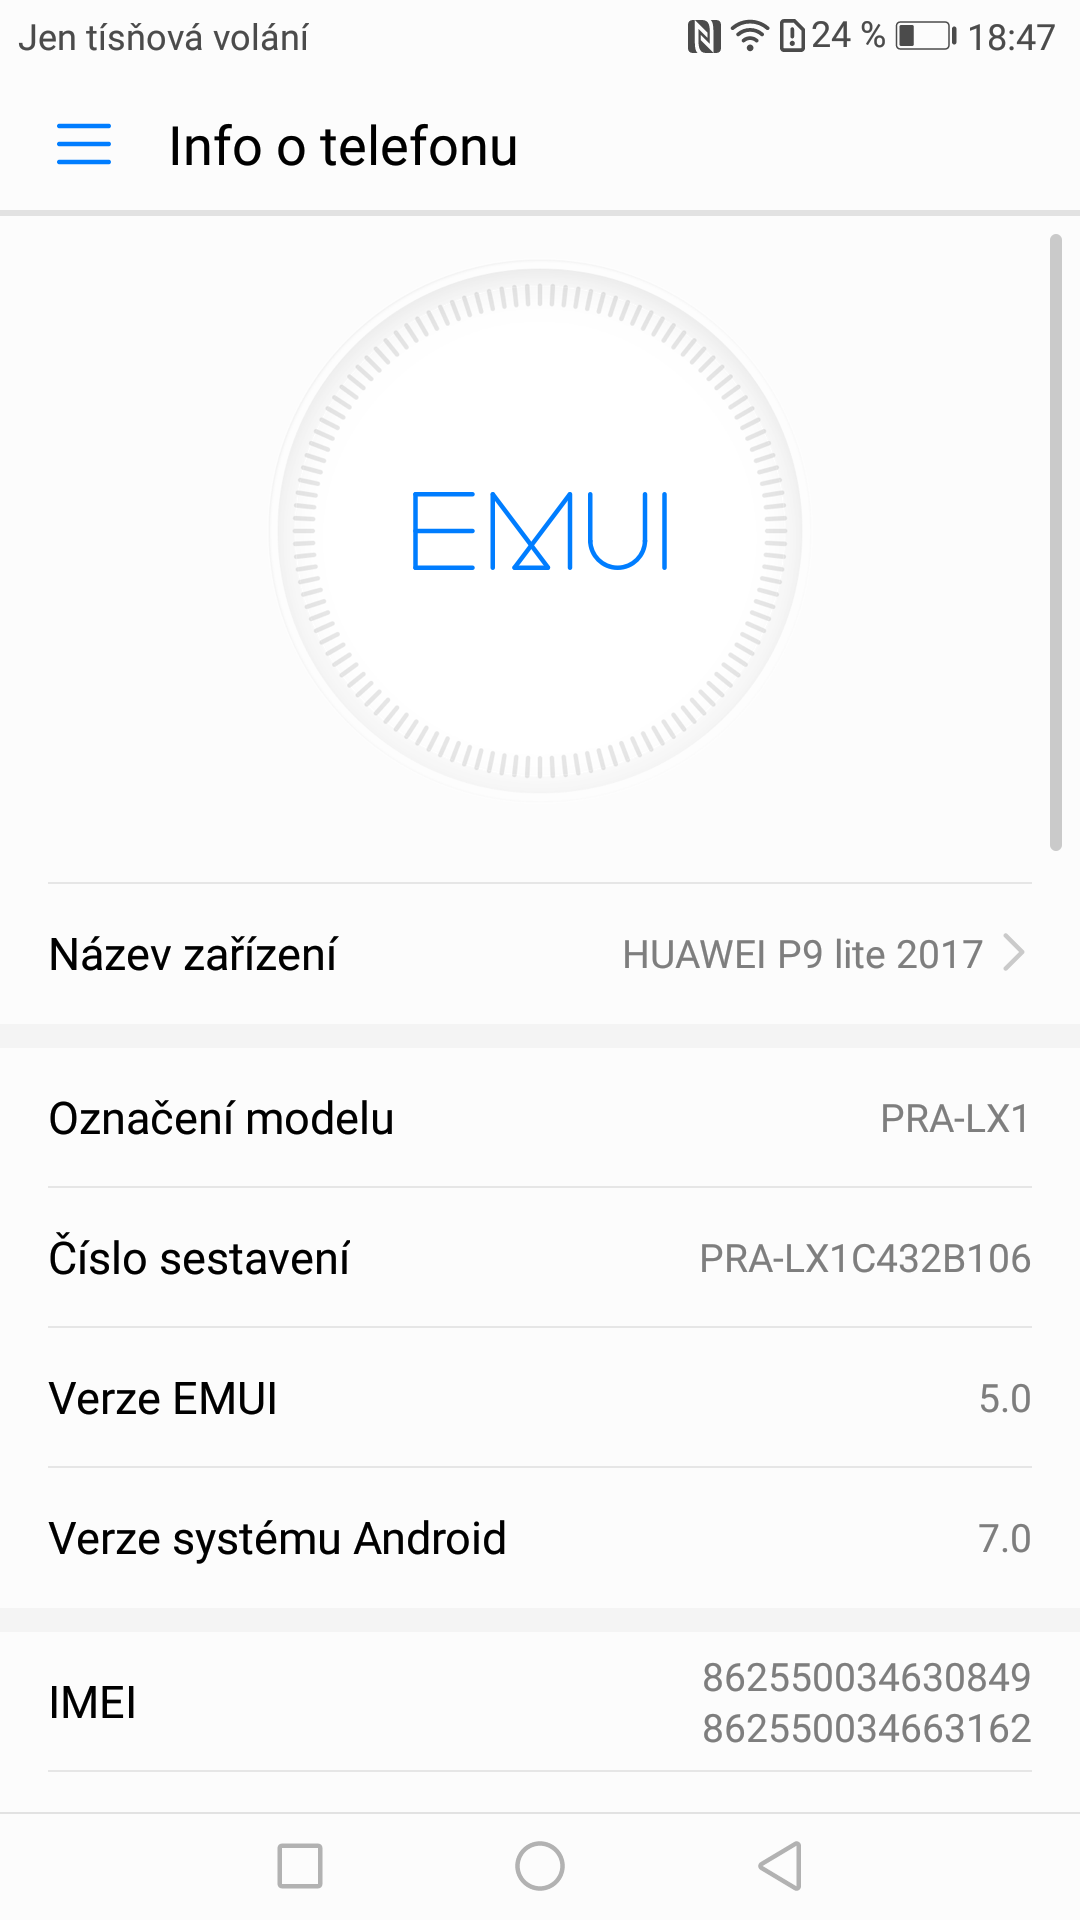 Huawei P9 Lite (2017)